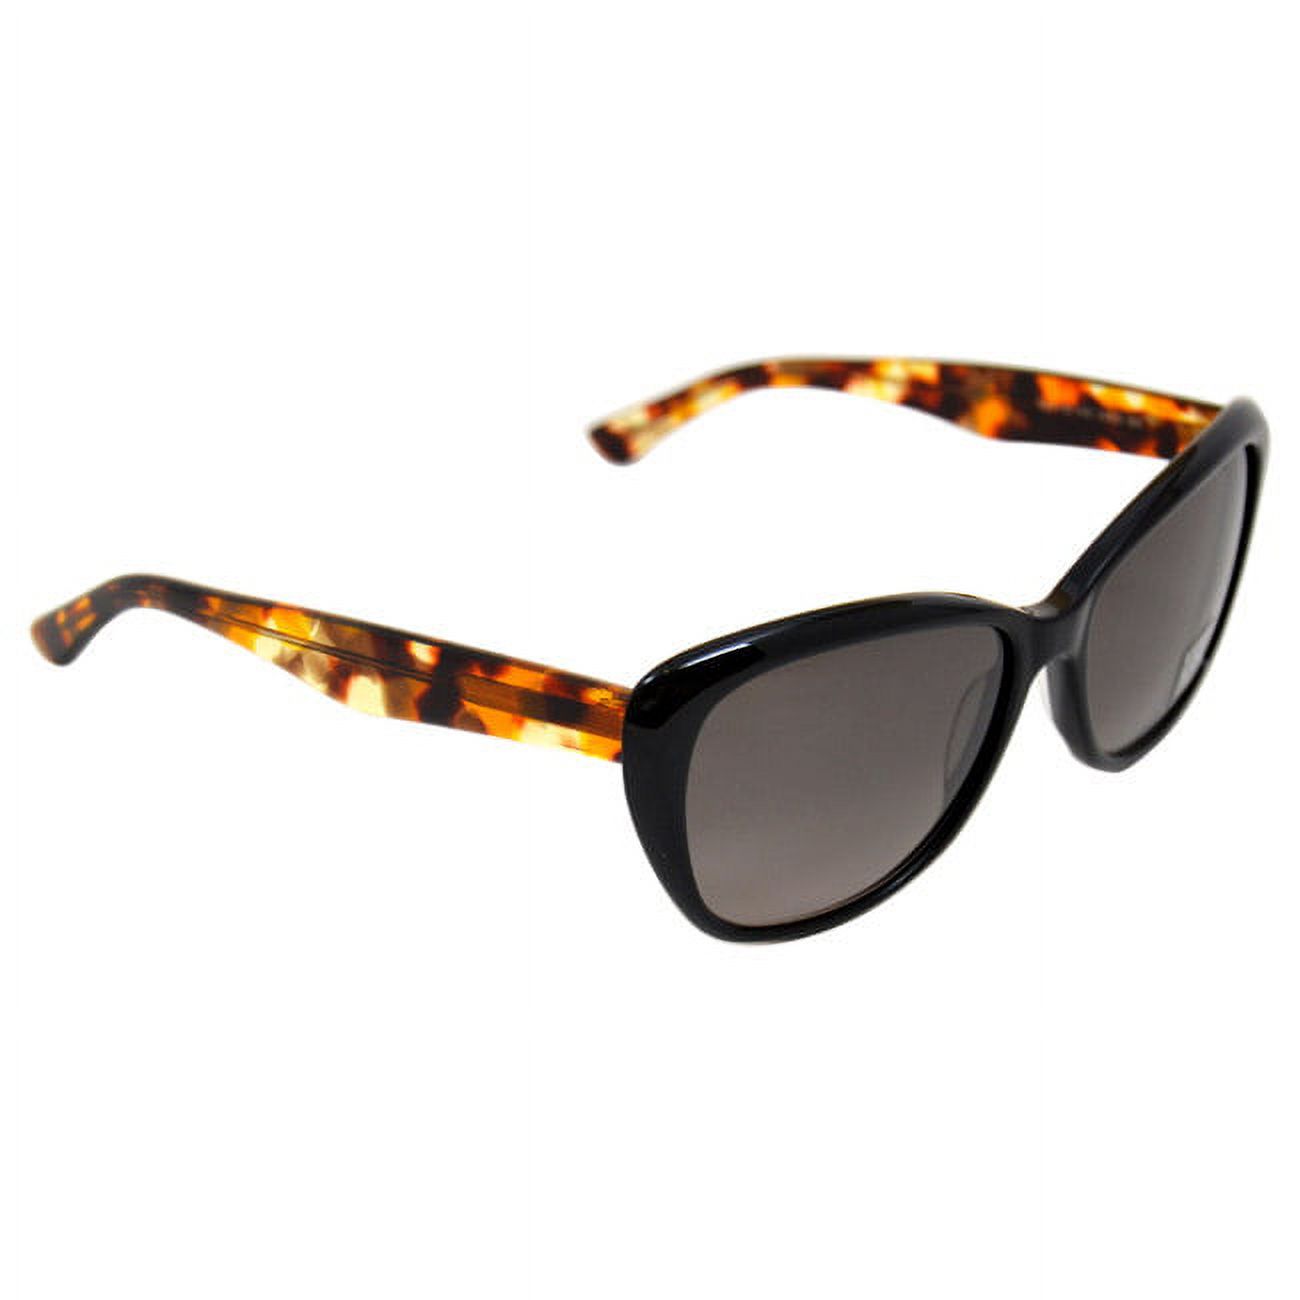 V400 - Black Vera Wang 56-16-140 mm Sunglasses Women - image 5 of 5